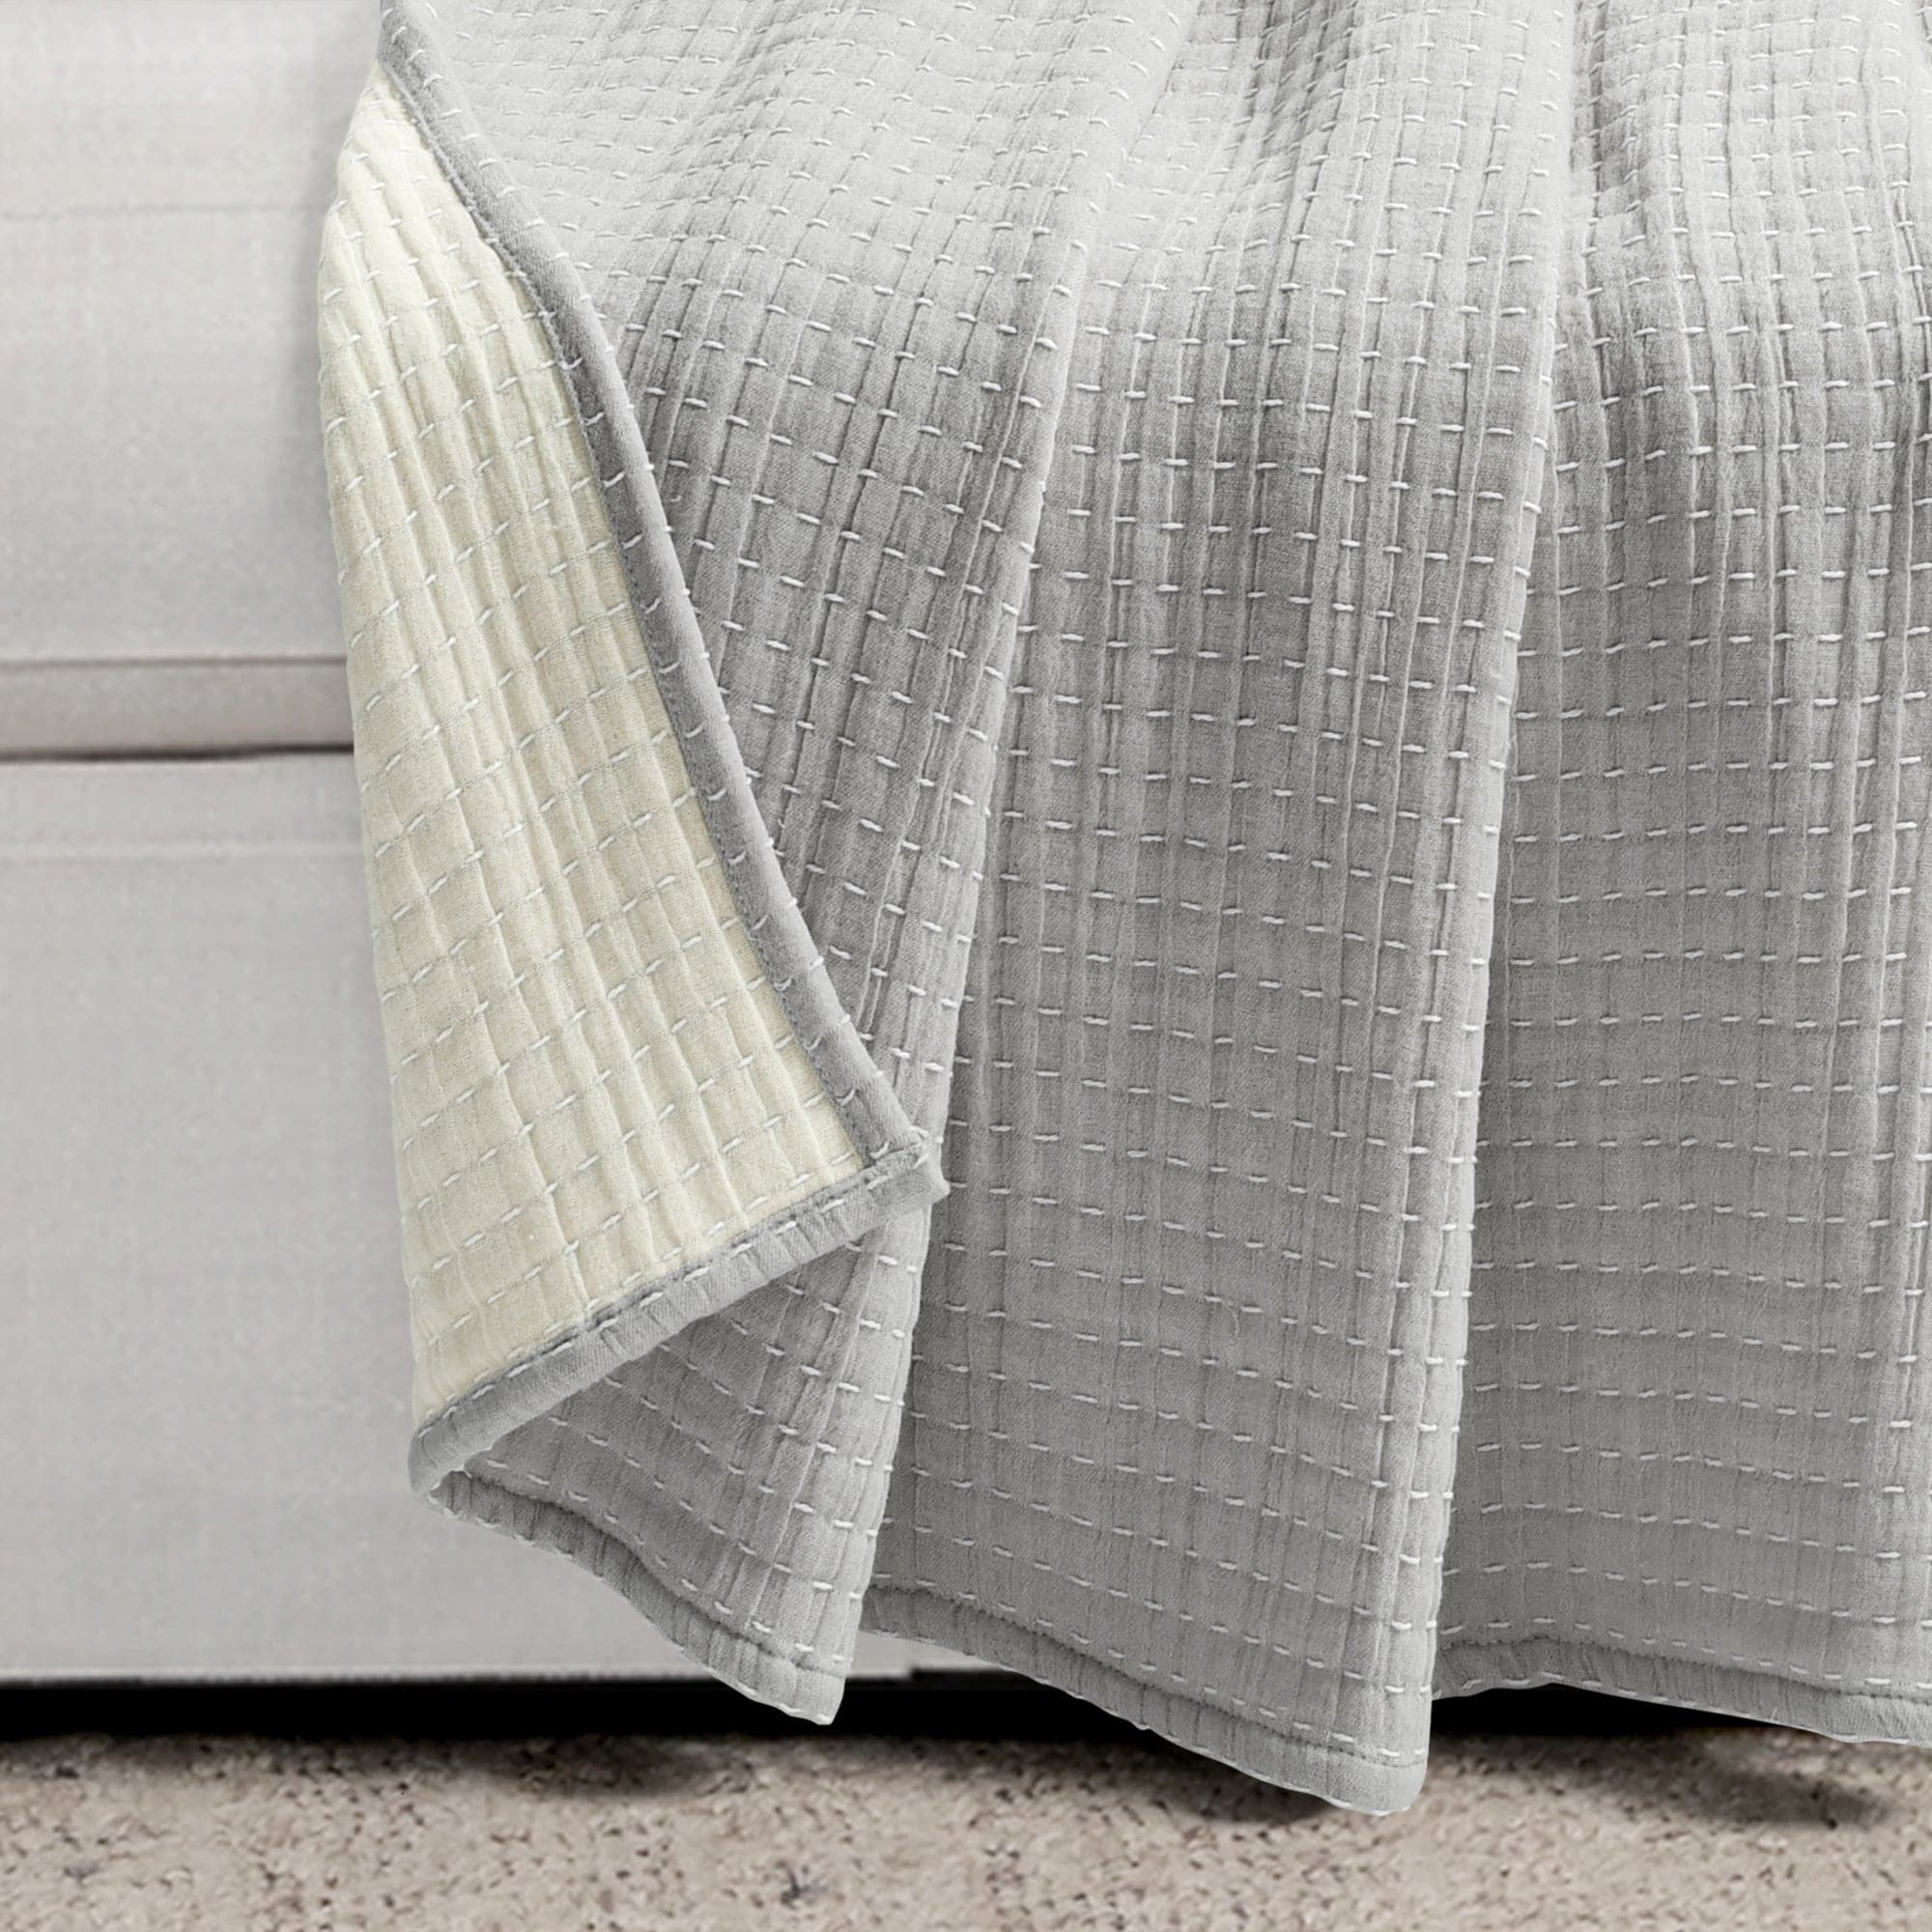 Fall Print and Yarn Dyed Towels – KAF Home